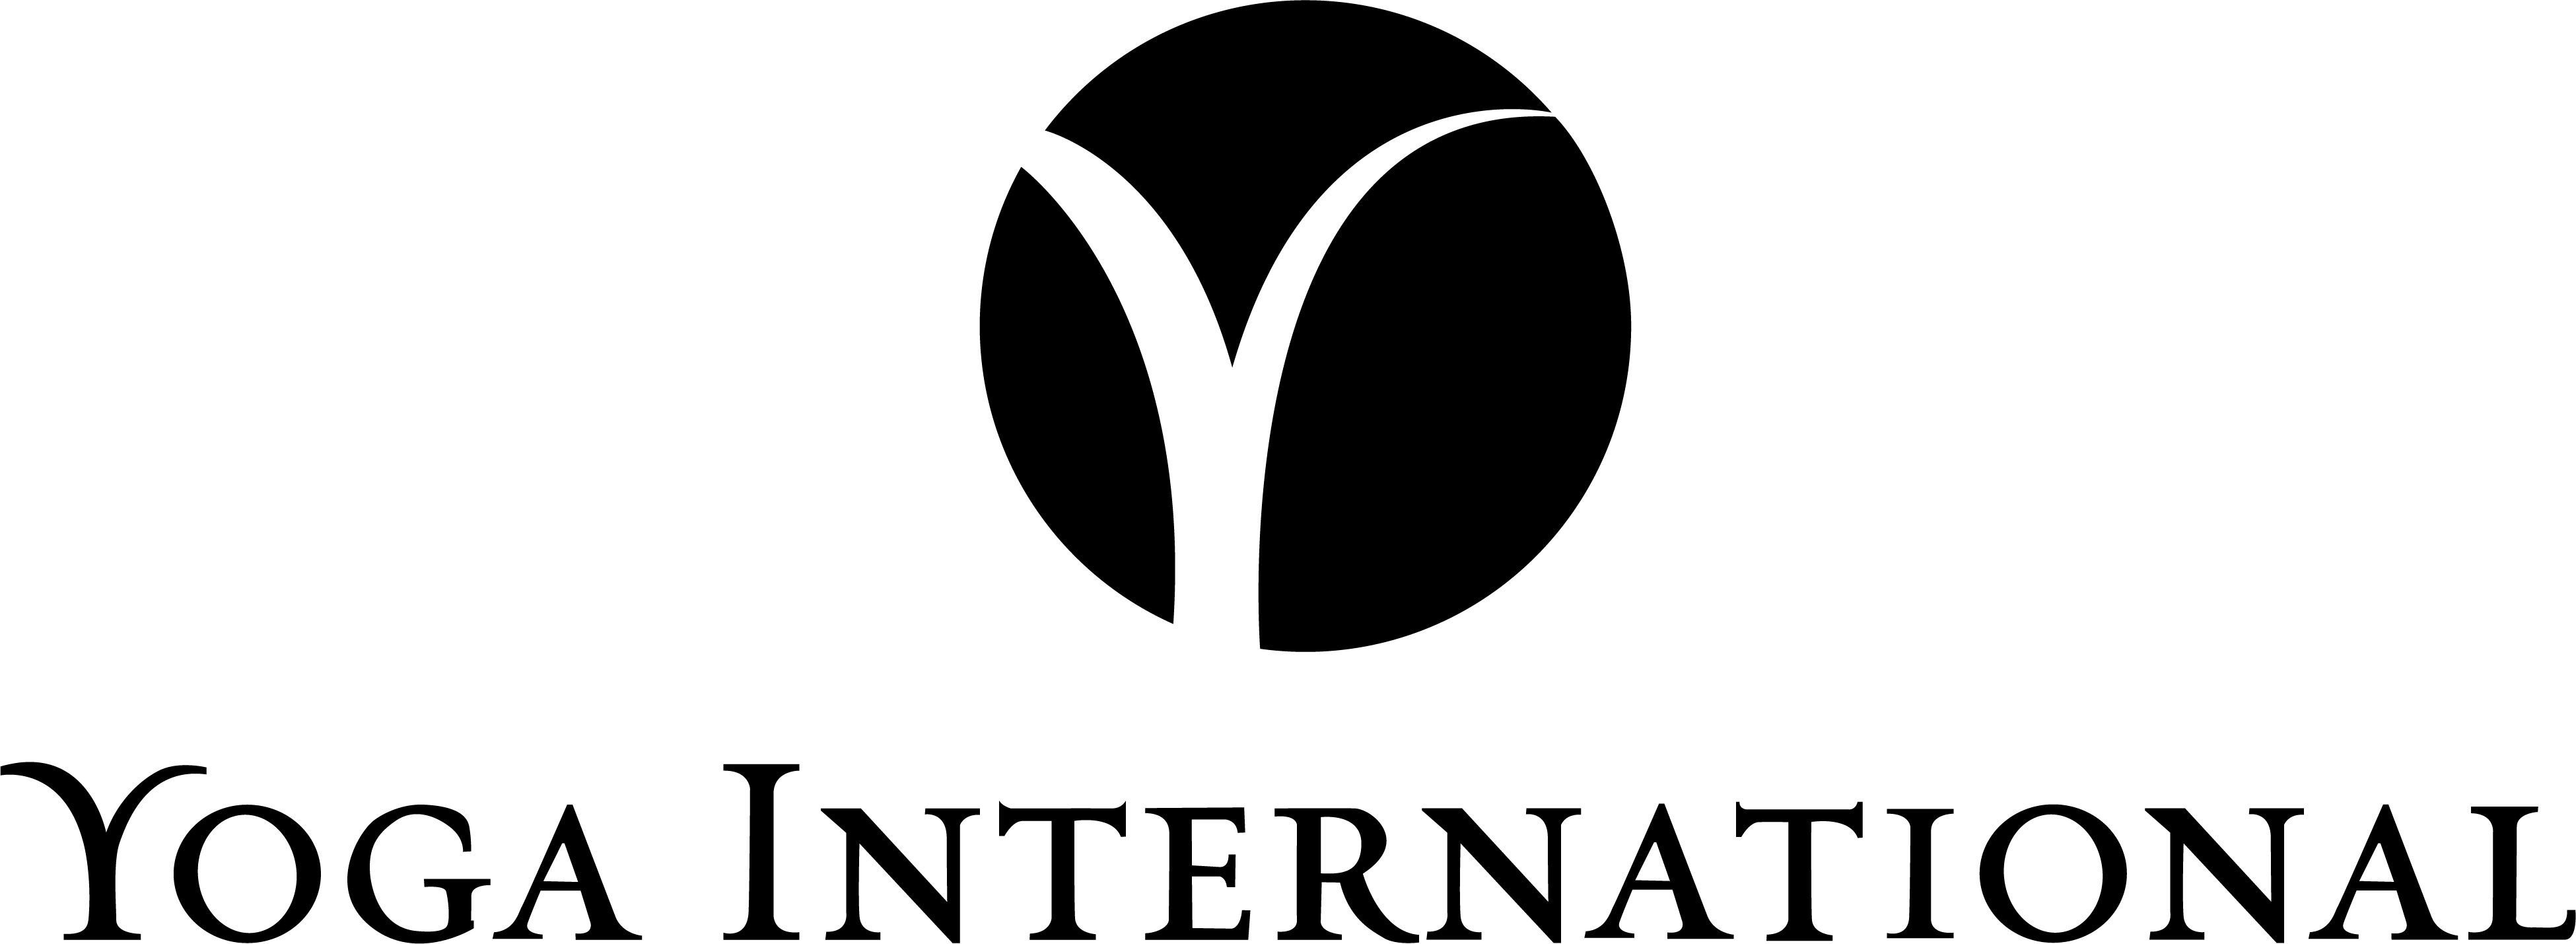 Yoga international